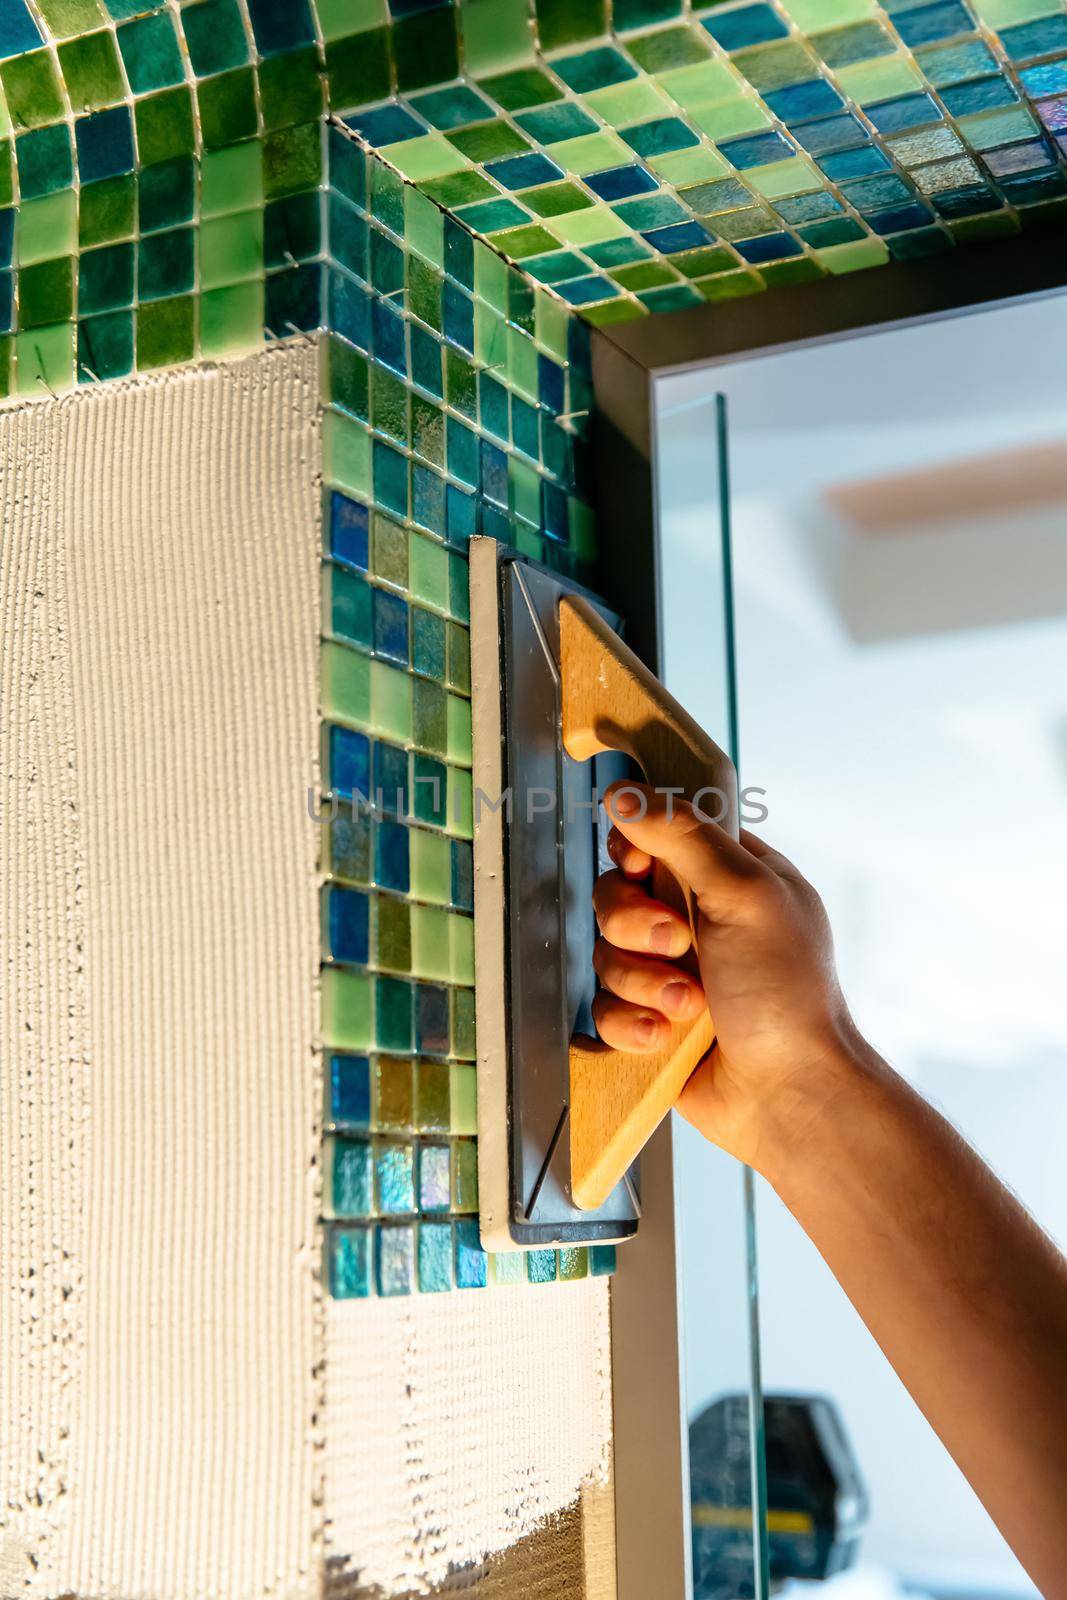 Applying mosaic tiles, bath renovation by RecCameraStock